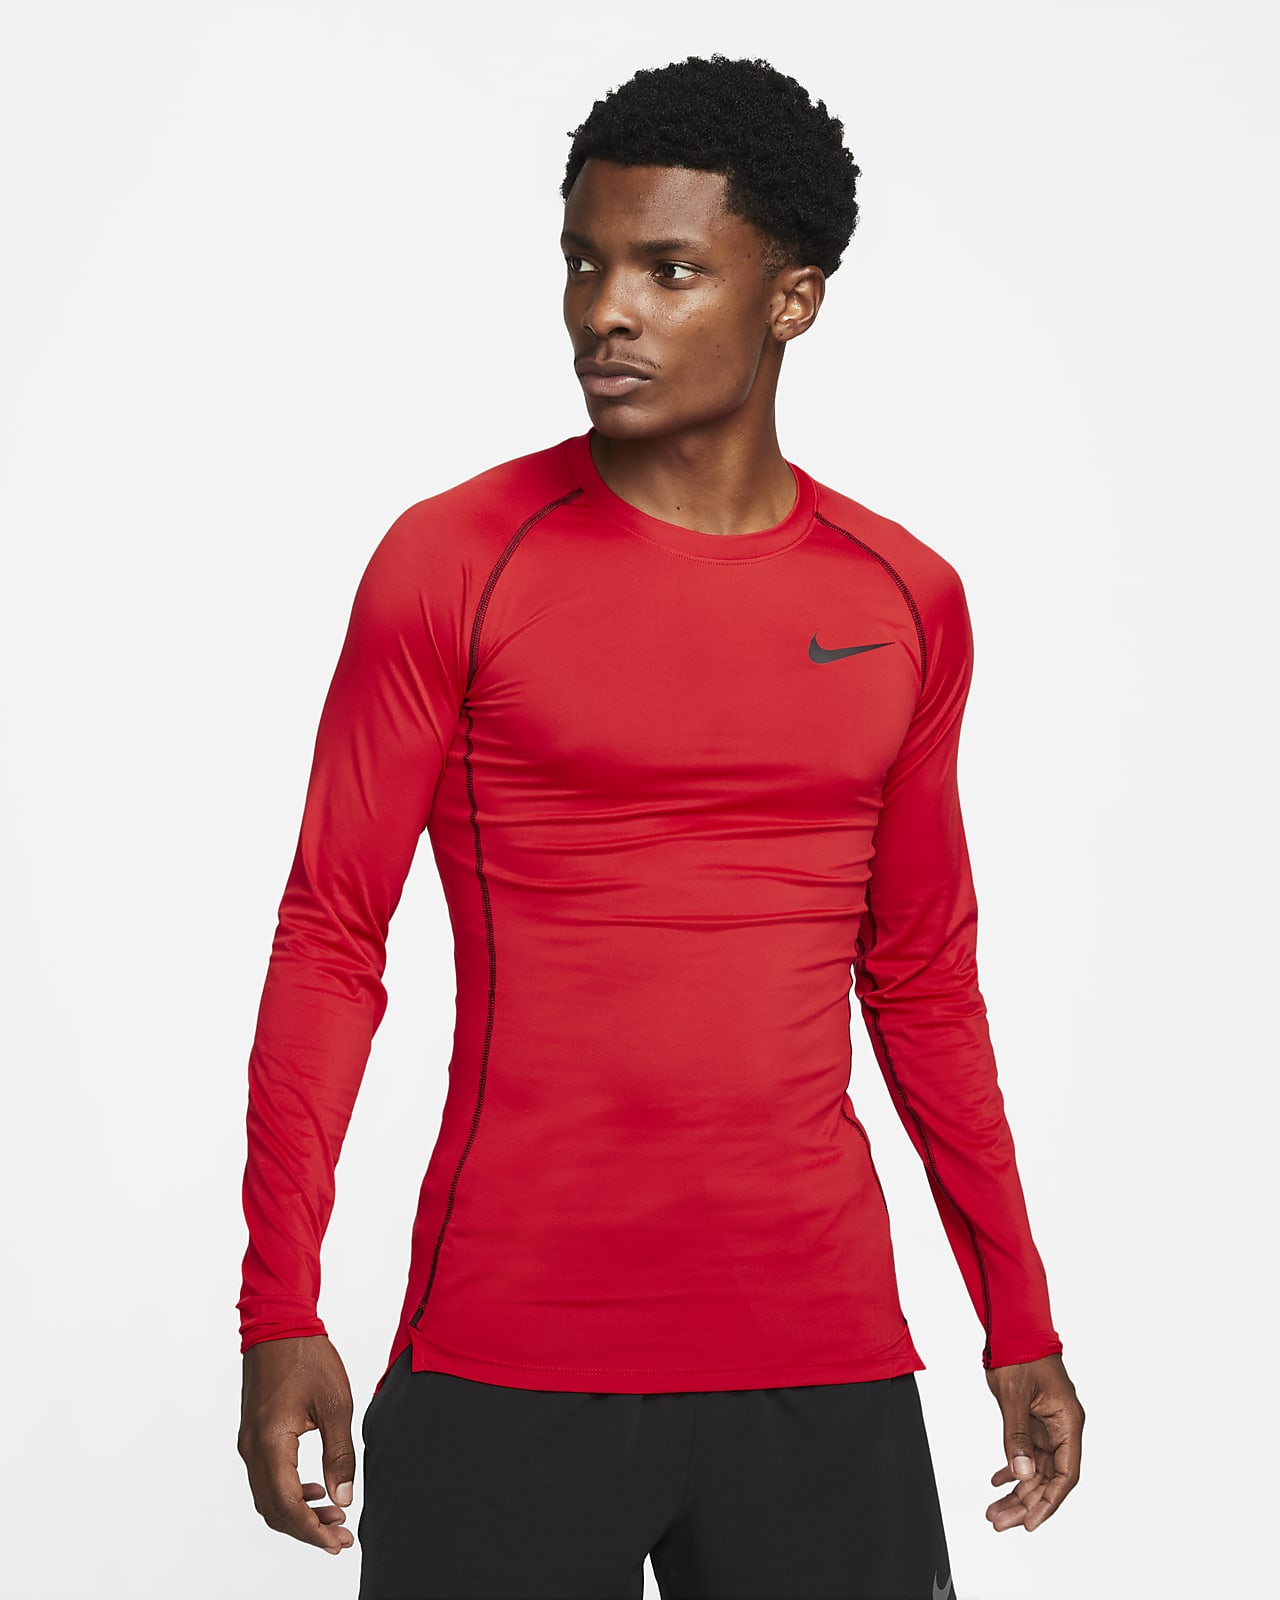 Trascendencia sonido este Nike Pro Dri-FIT Men's Tight-Fit Long-Sleeve Top. Nike LU